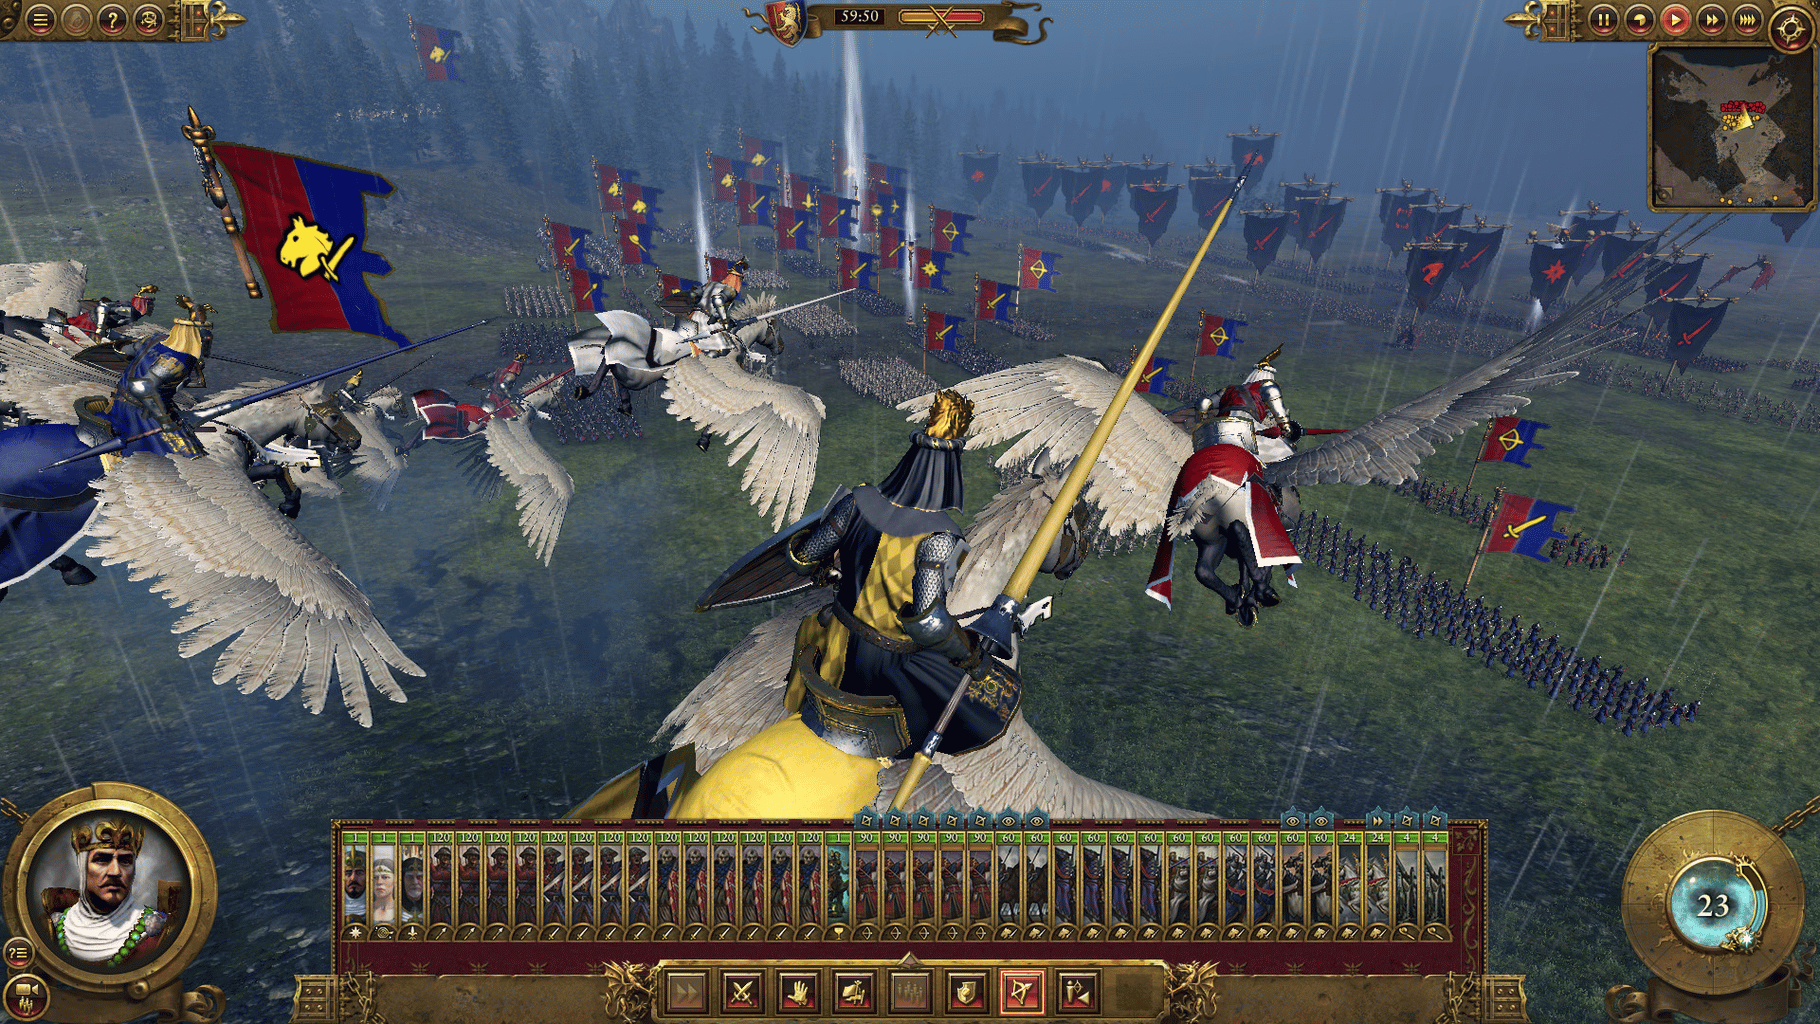 Total War: Warhammer - Bretonnia screenshot